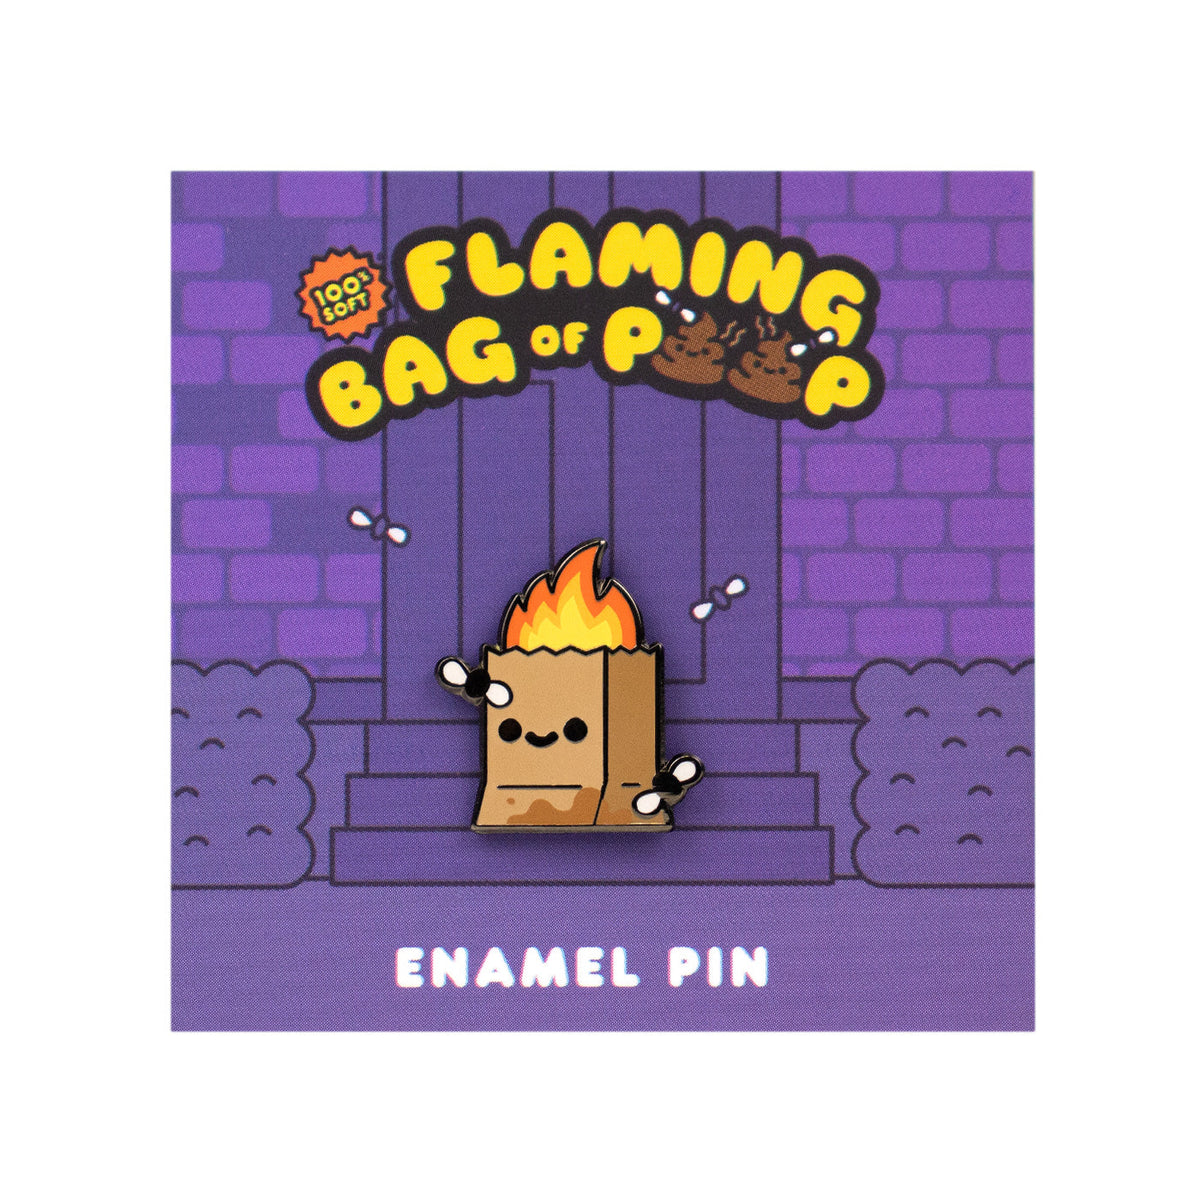 Flaming Bag of Poop Enamel Pin